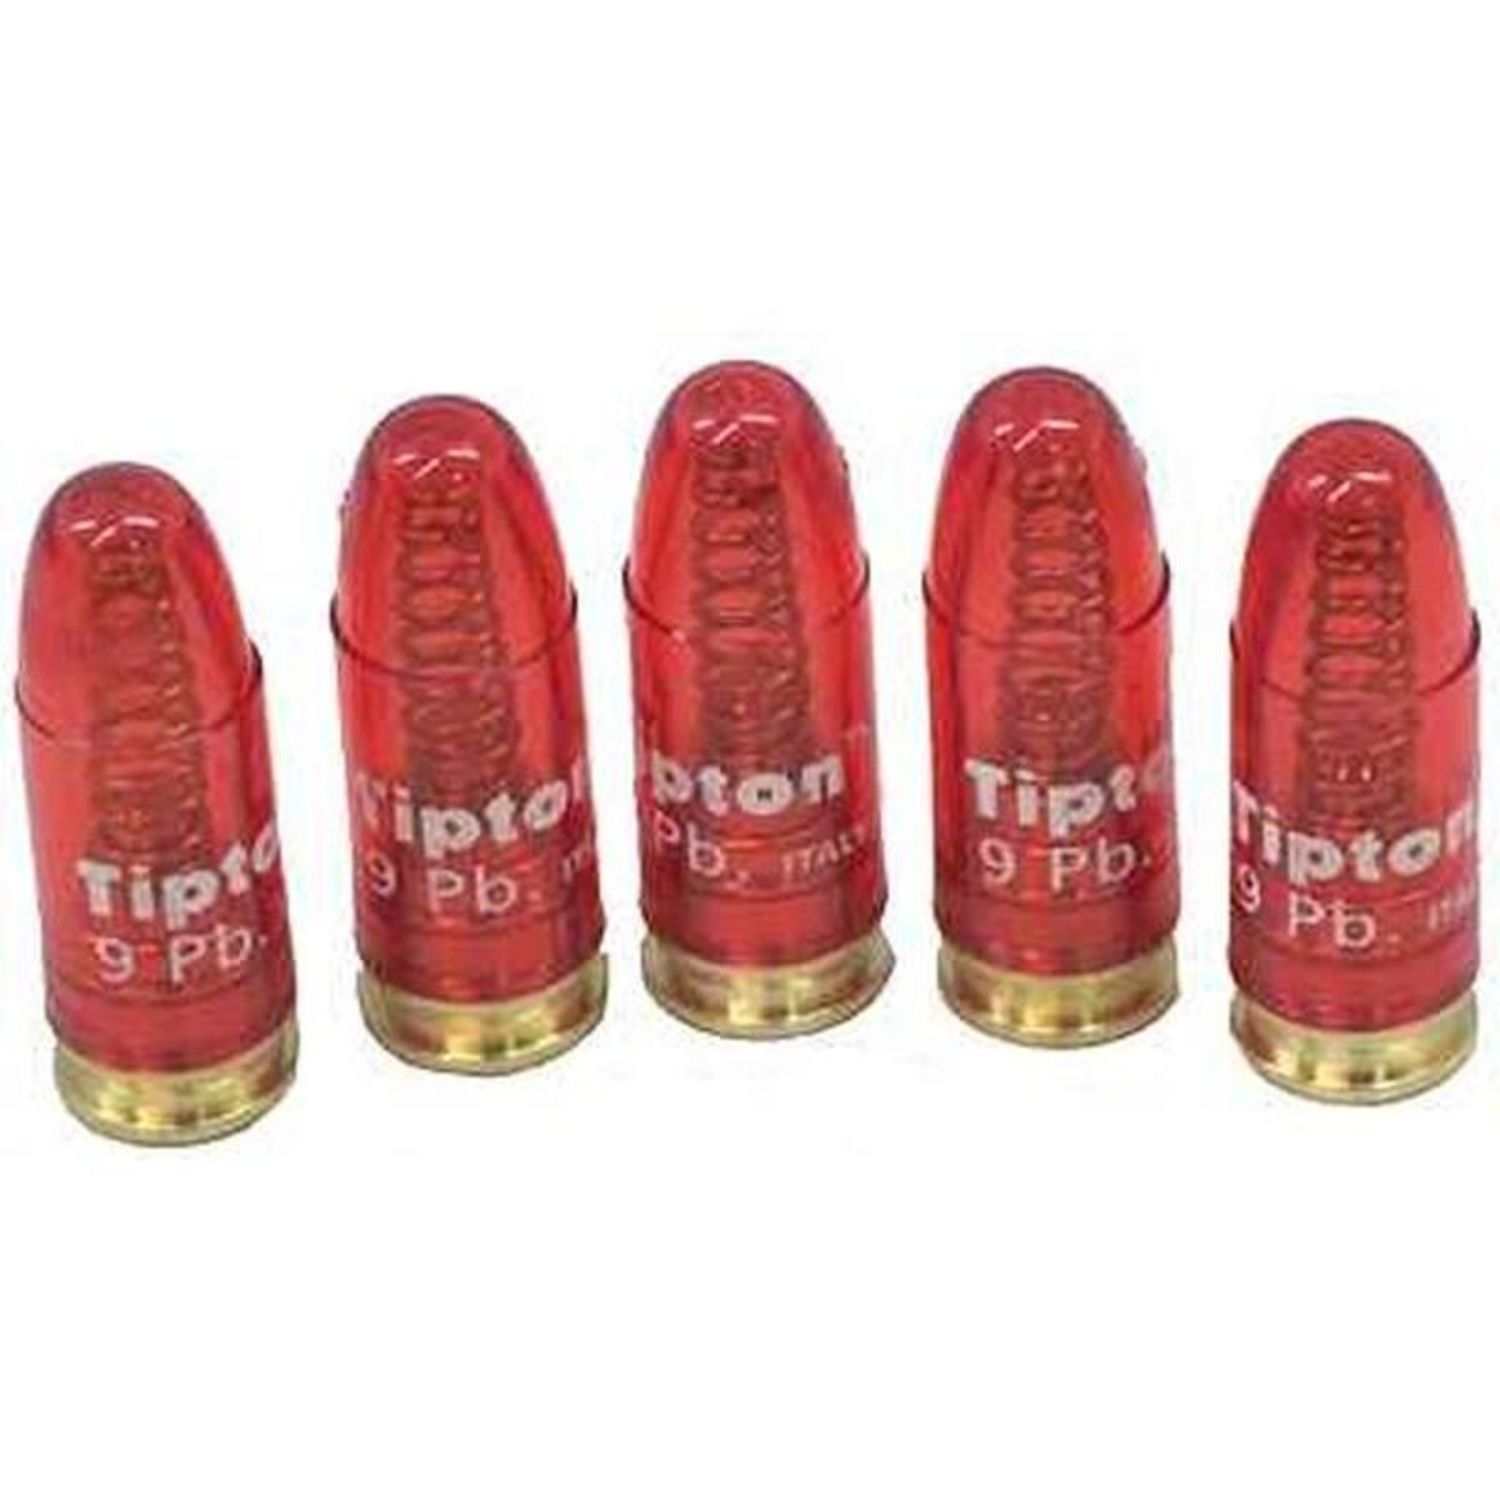 Tipton 303958 Snap Caps  9mm 5 pk